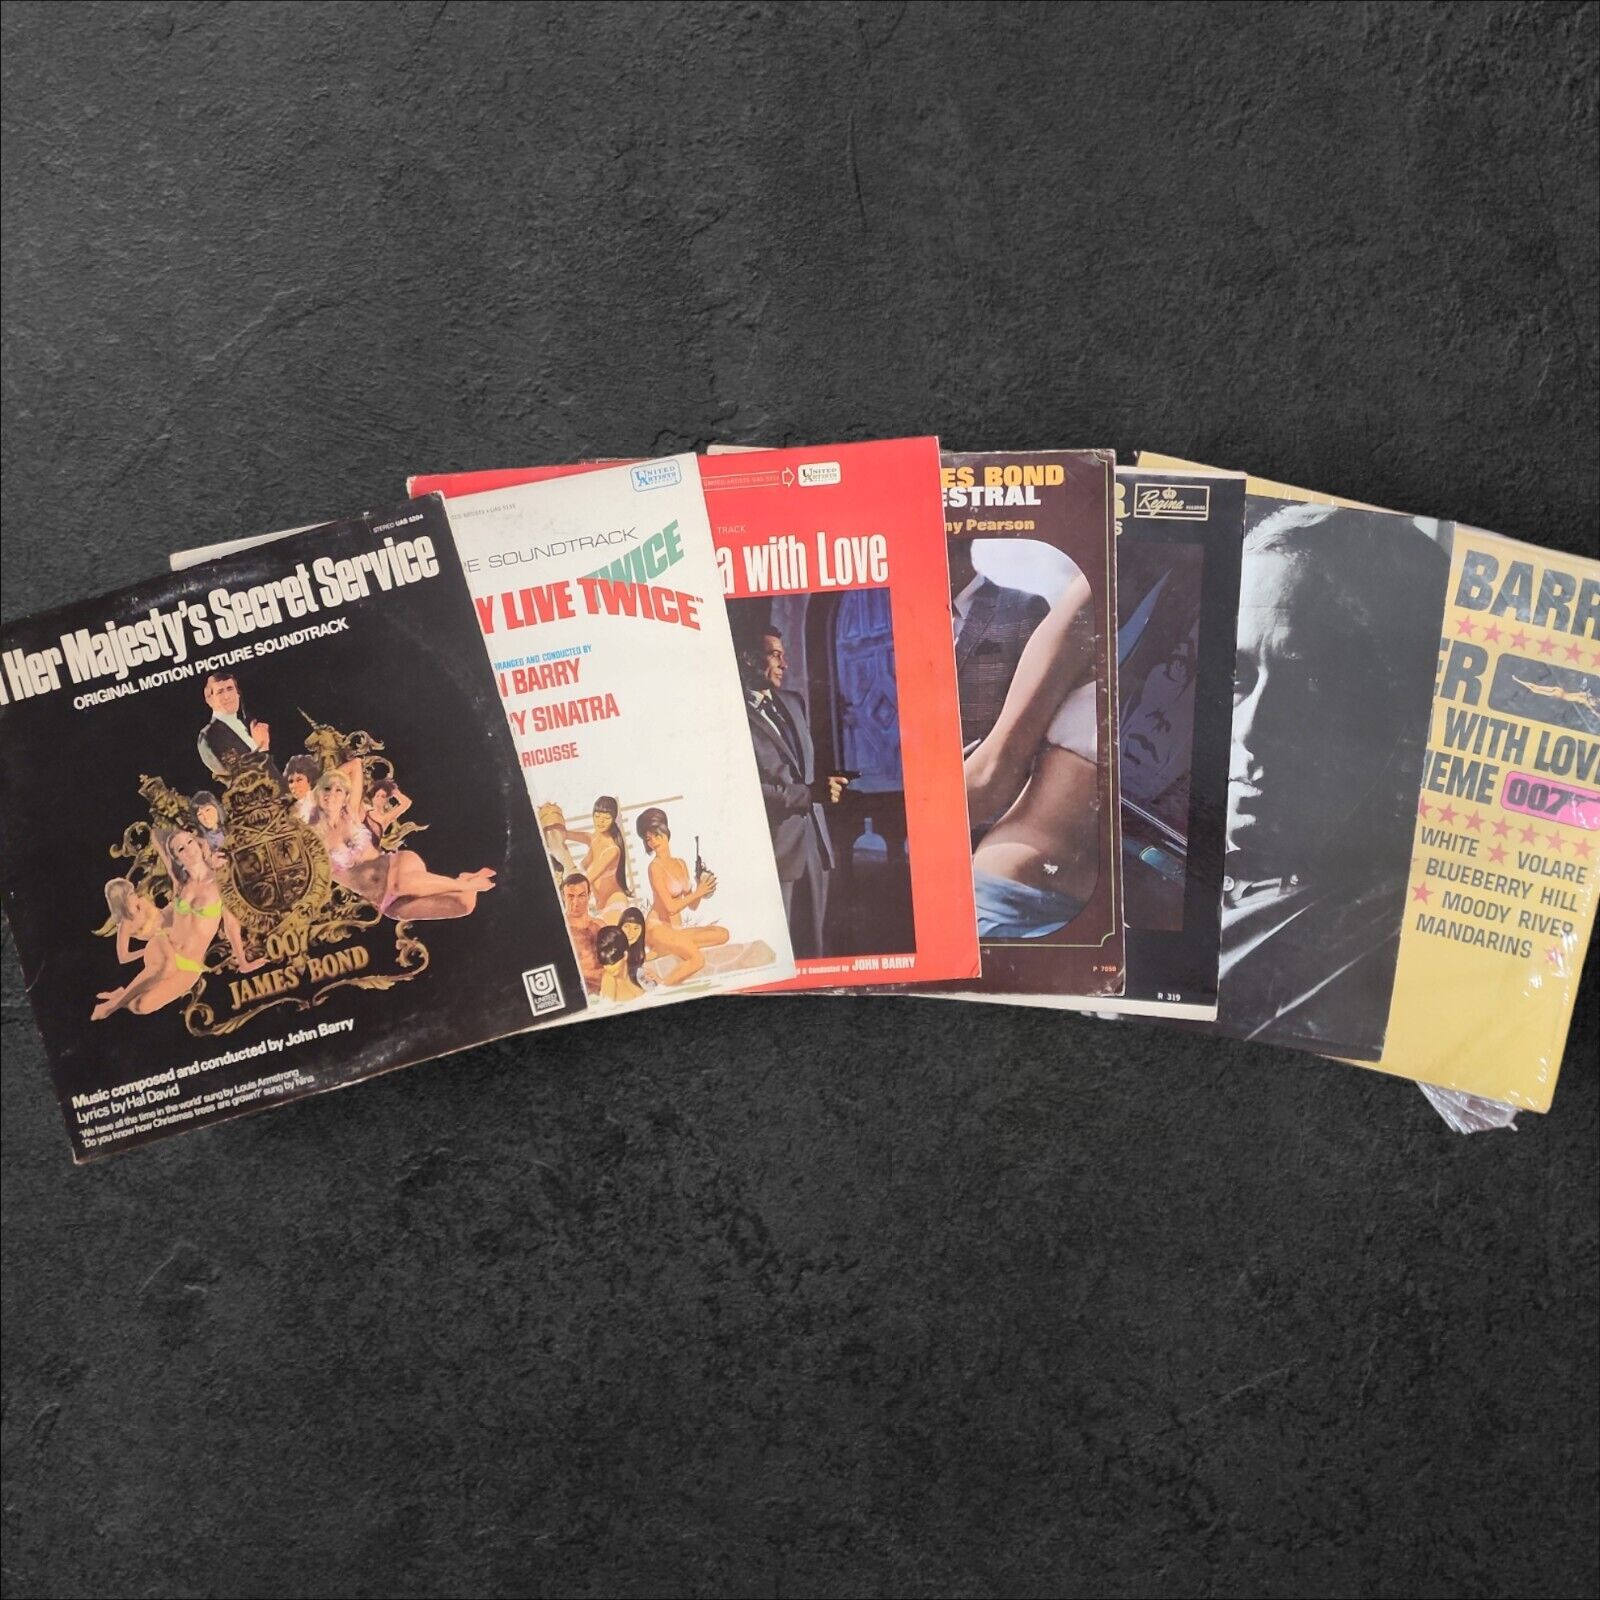 James Bond 007 Vintage Vinyl Lot (7 LPs) 60s 70s Spy Soundtrack Records